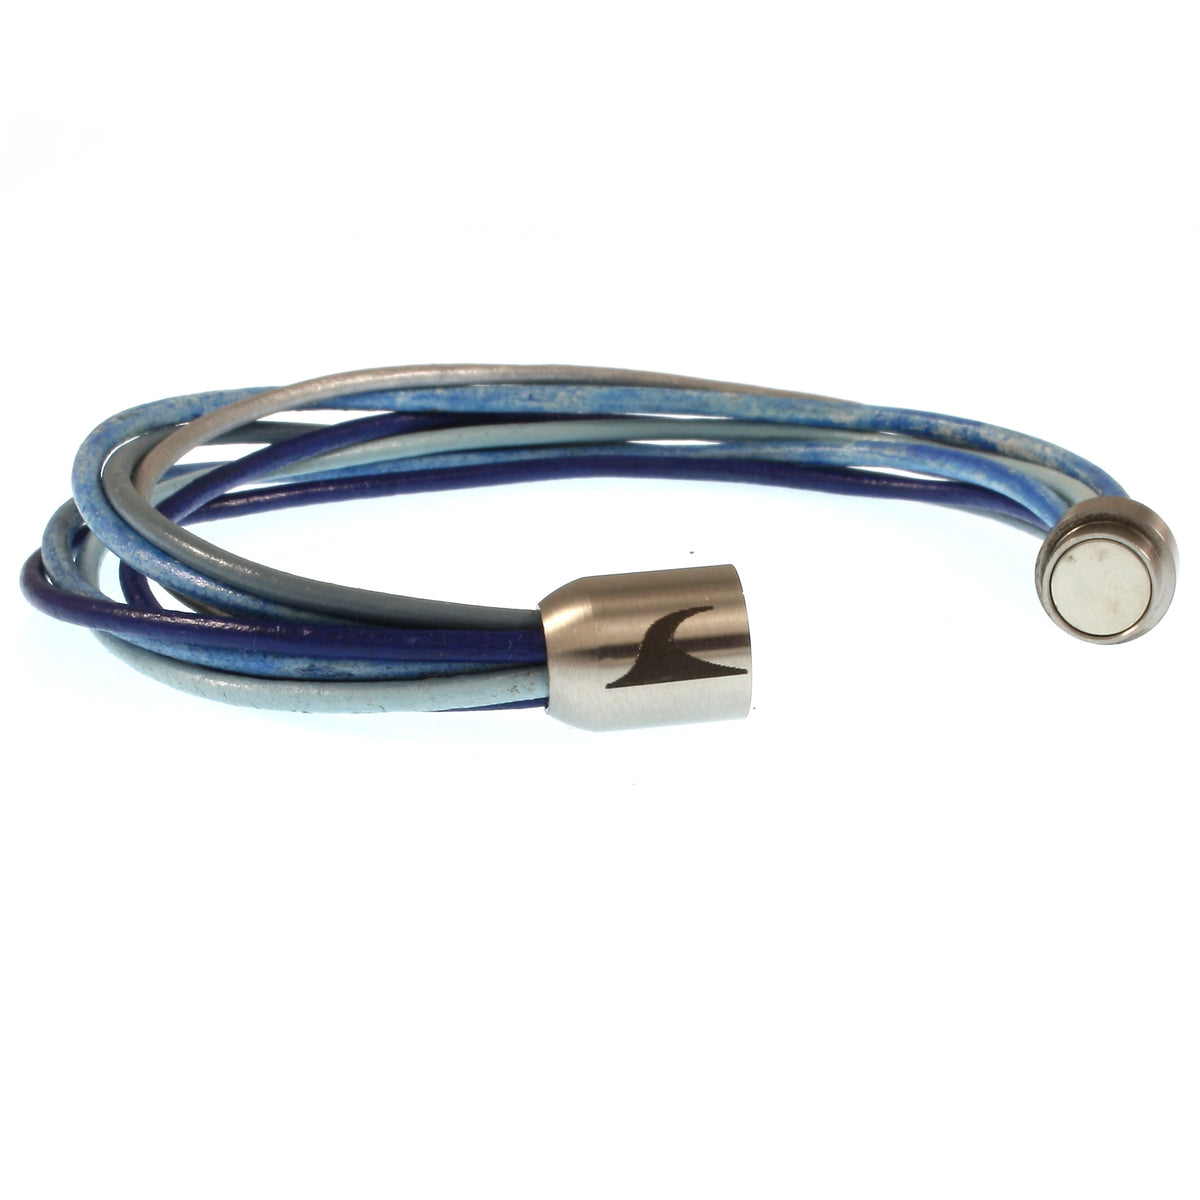 Damen-Leder-armband-fem-ocean-marine-blau-hellblau-multicolor-silber-Edelstahlverschluss-offen-wavepirate-shop-r